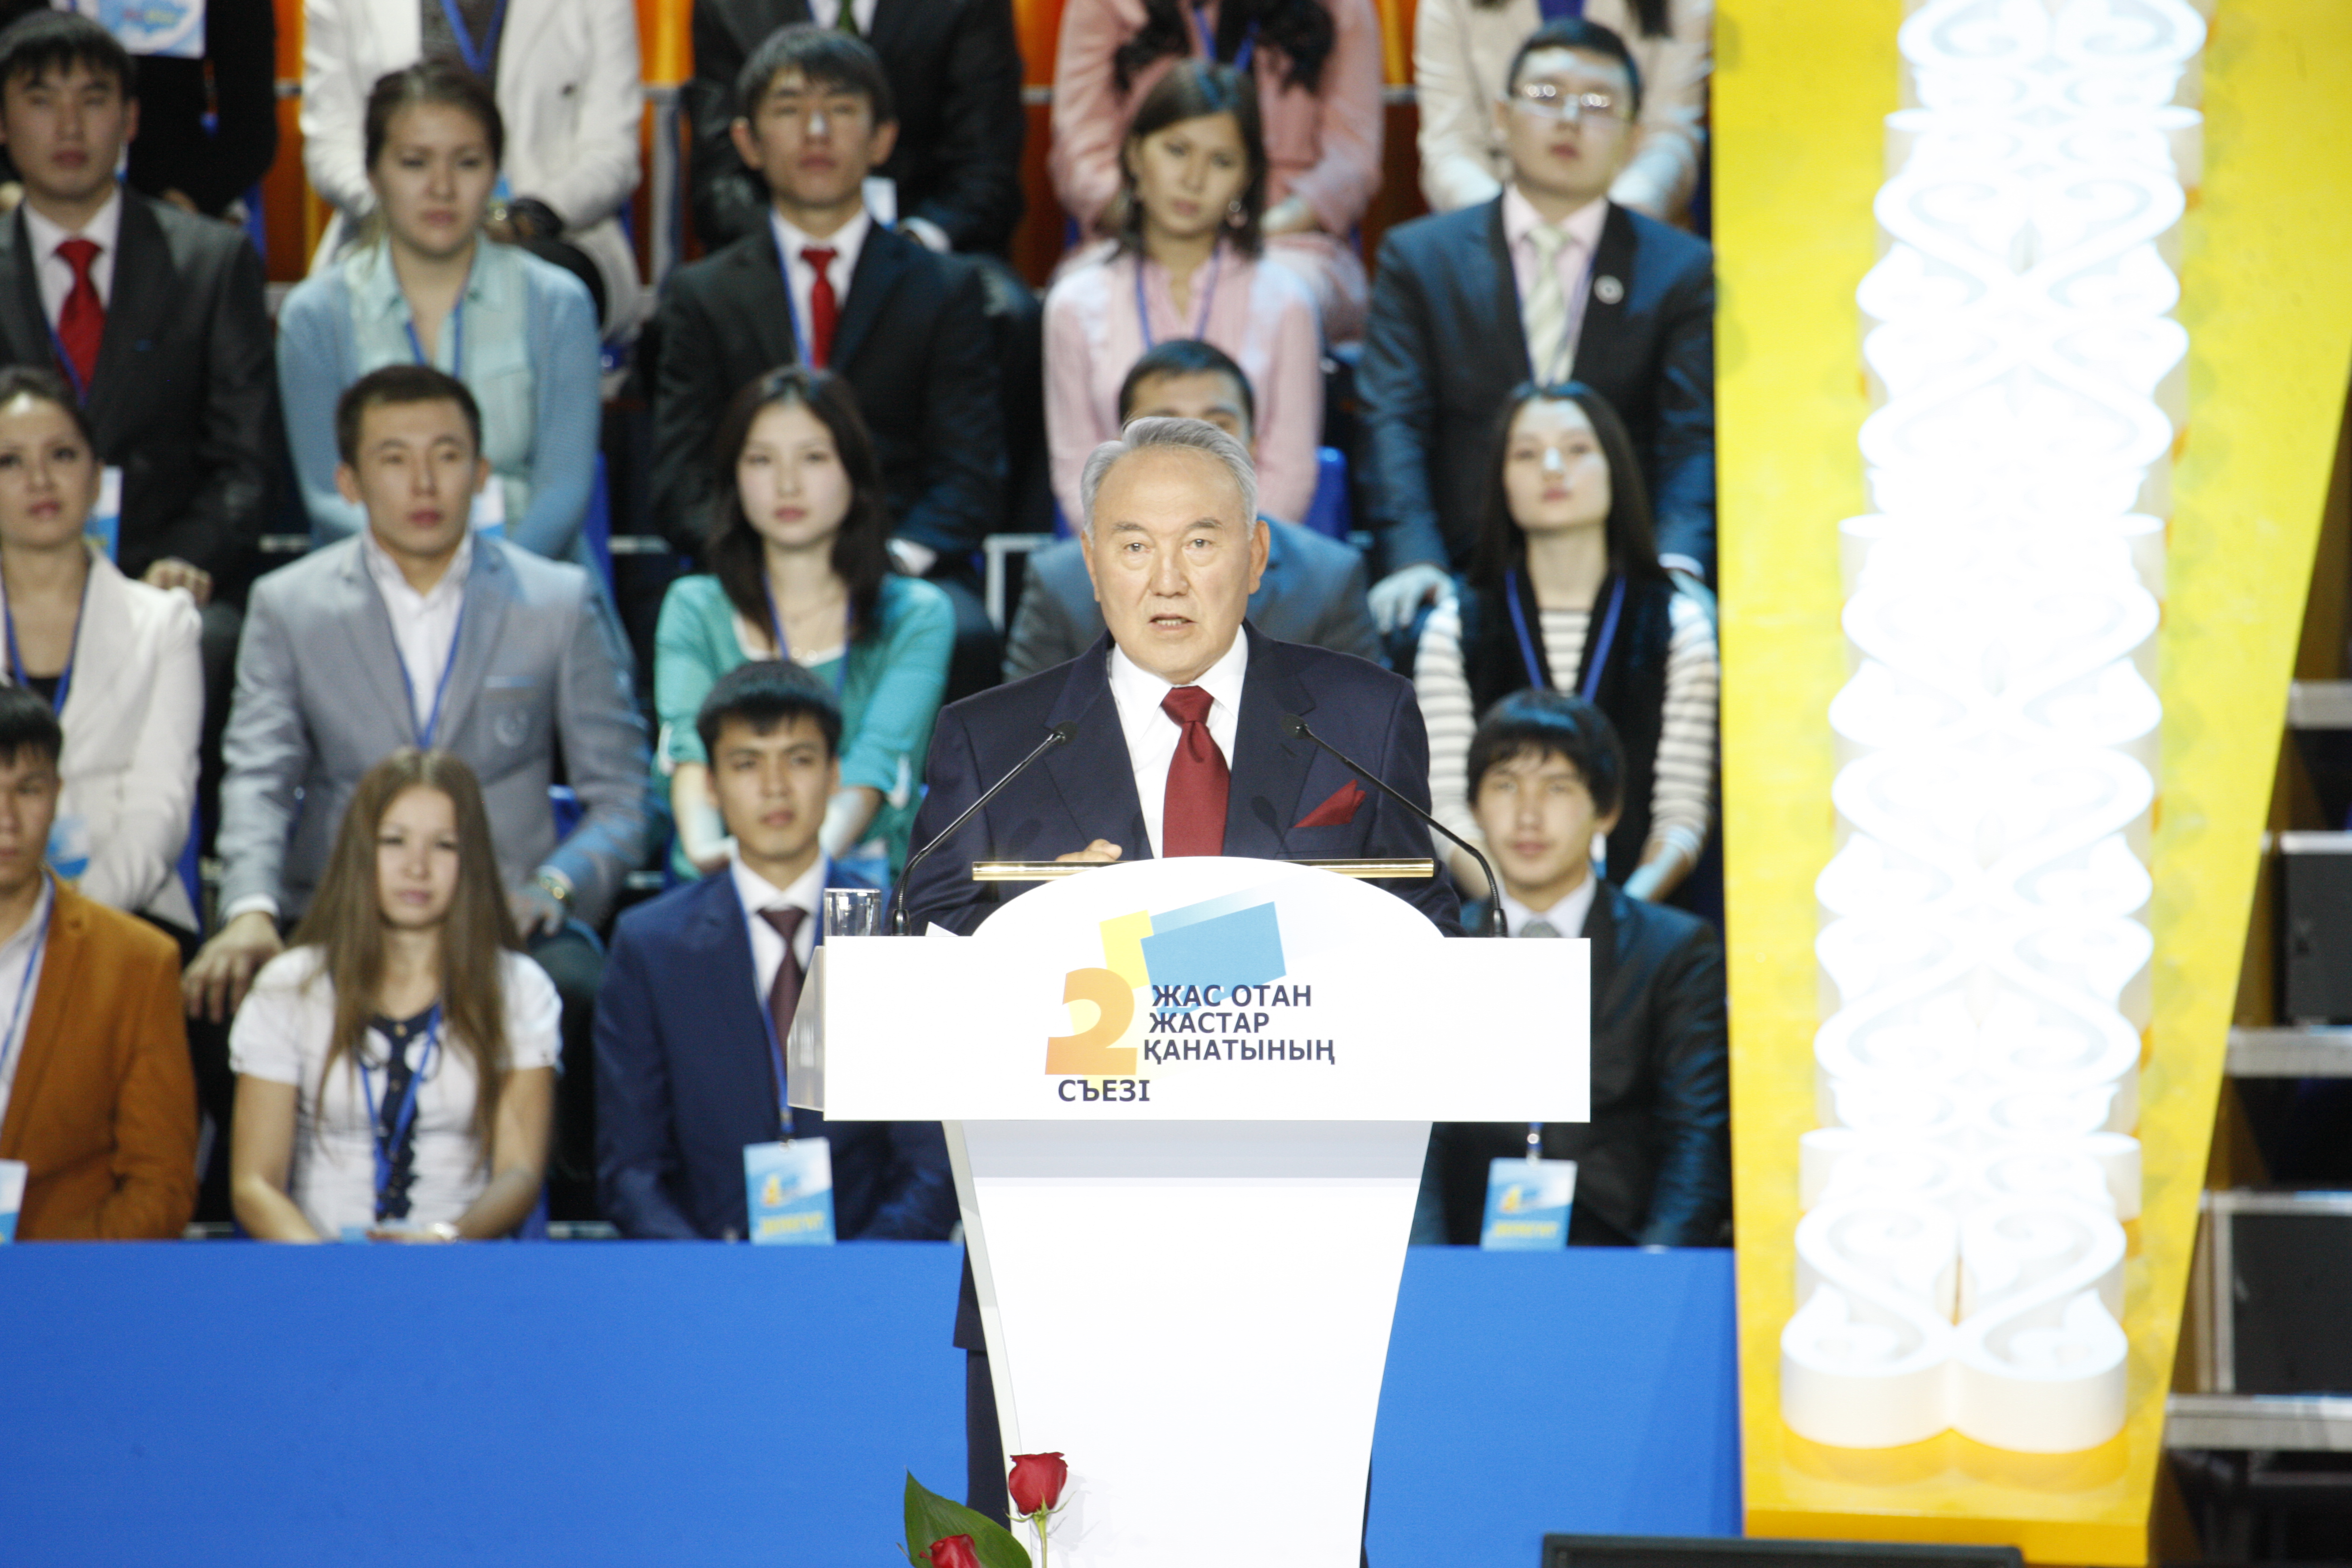 Nazarbayev delivering a speech in 2012